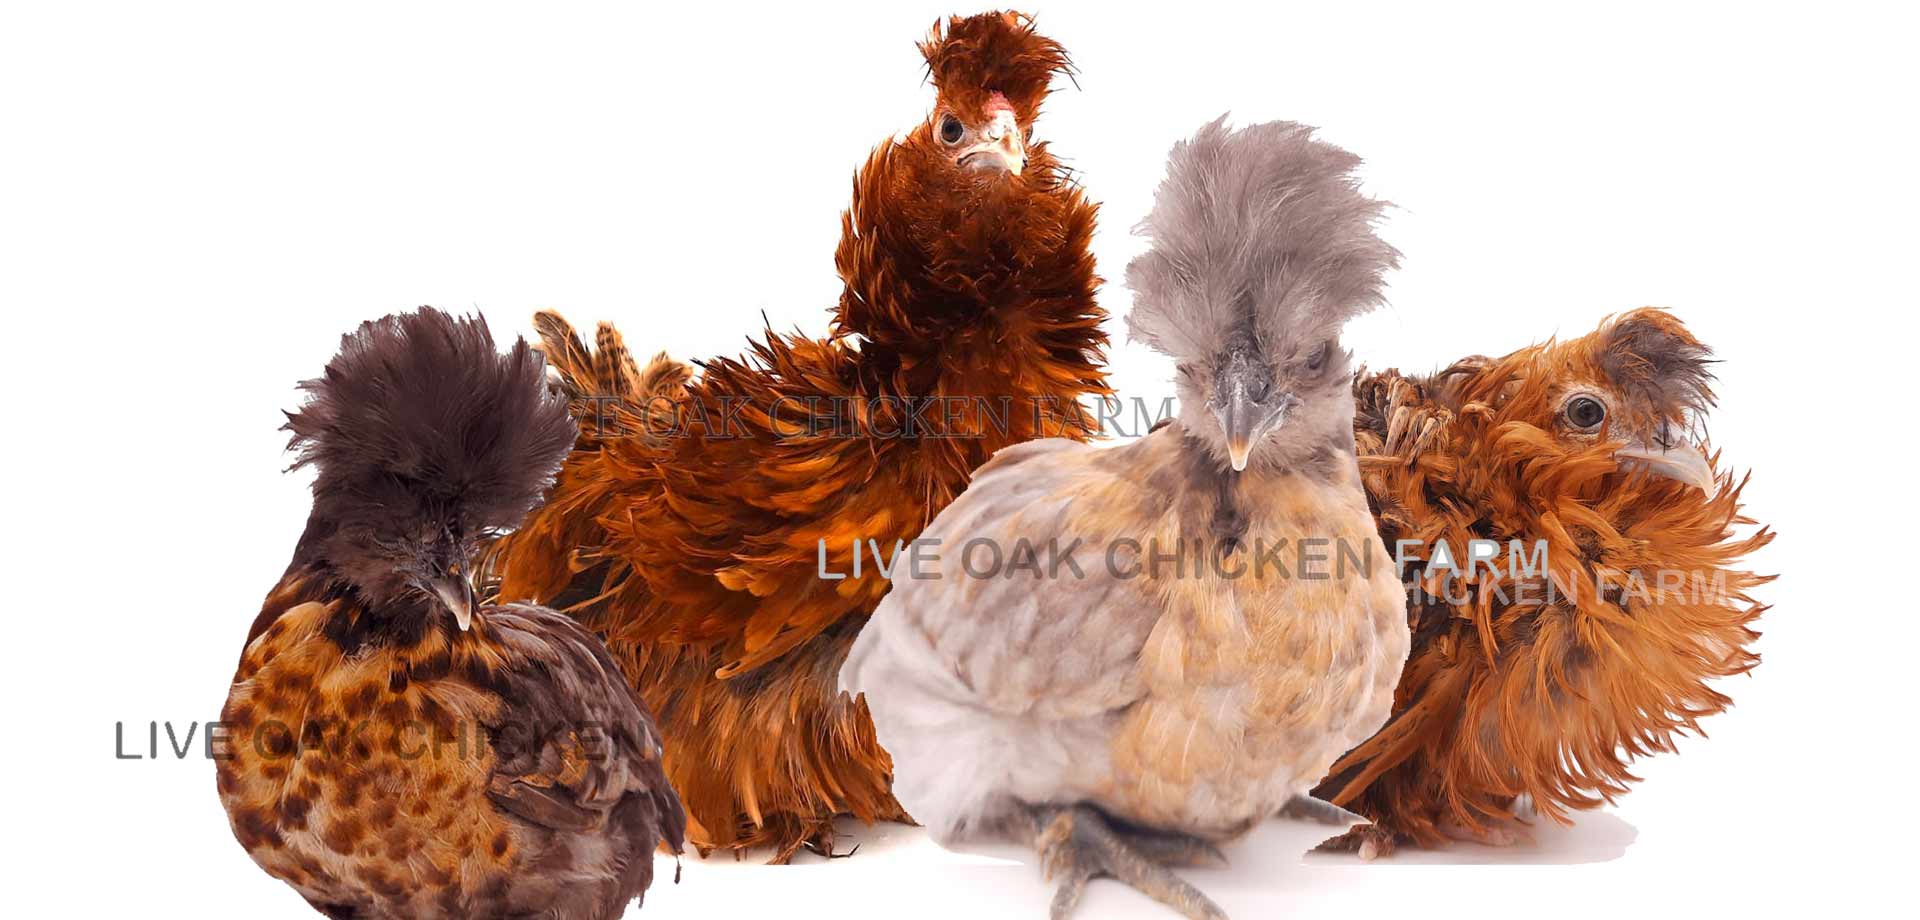 Chickens For Sale Houston Chicken Farm by Live Oak Chicken Farm. On Site Chicken Hatcher and Chicken Breeding Facility in Houston.